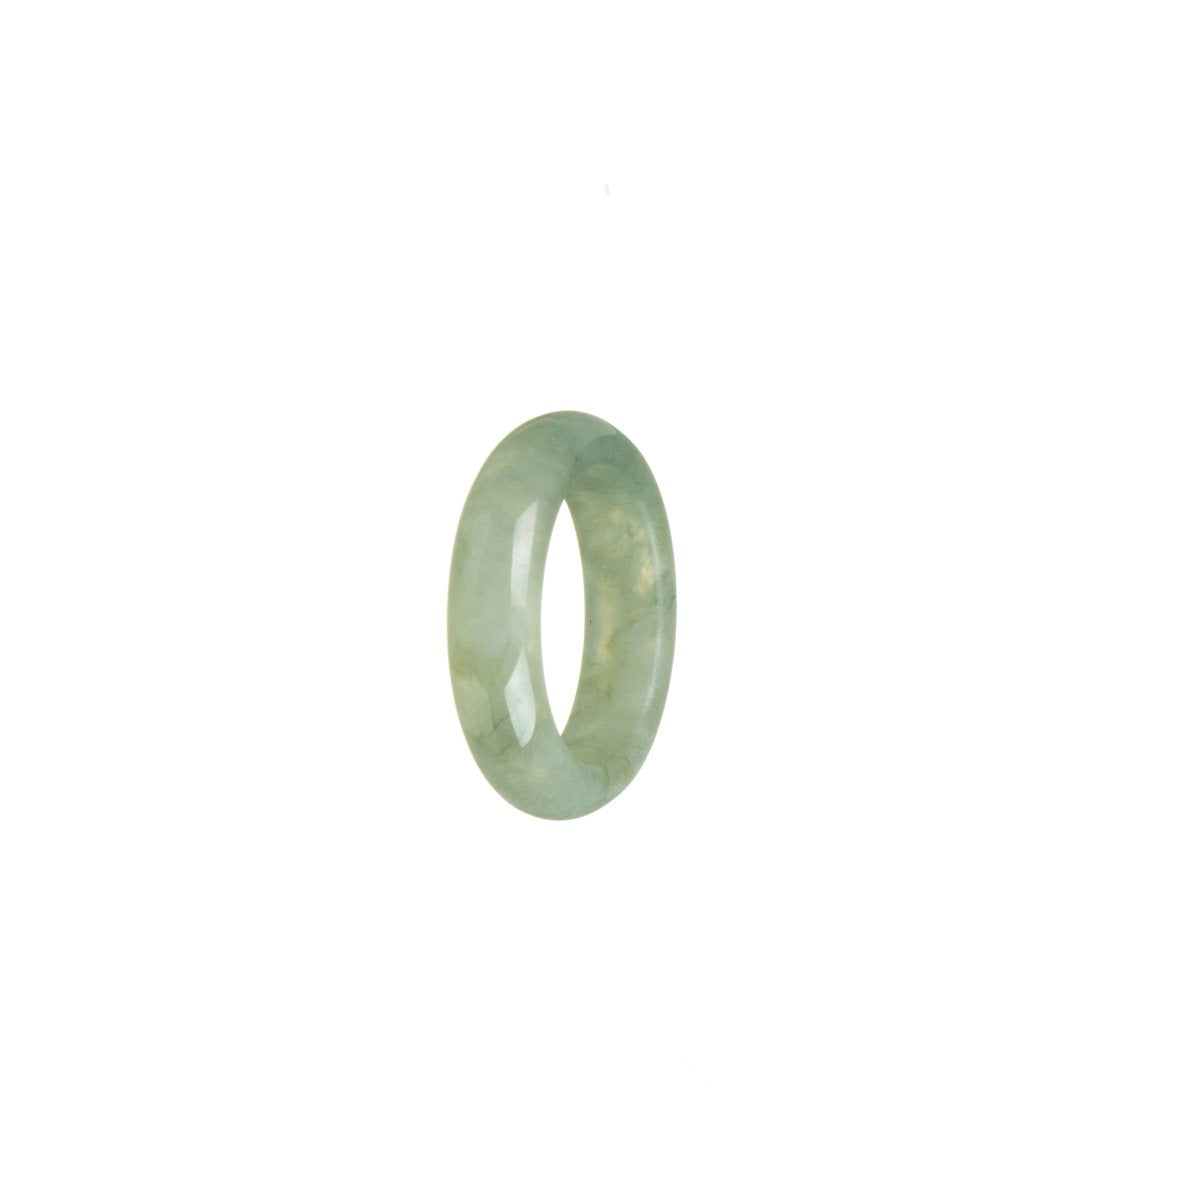 Certified Green Jade Ring - Size N